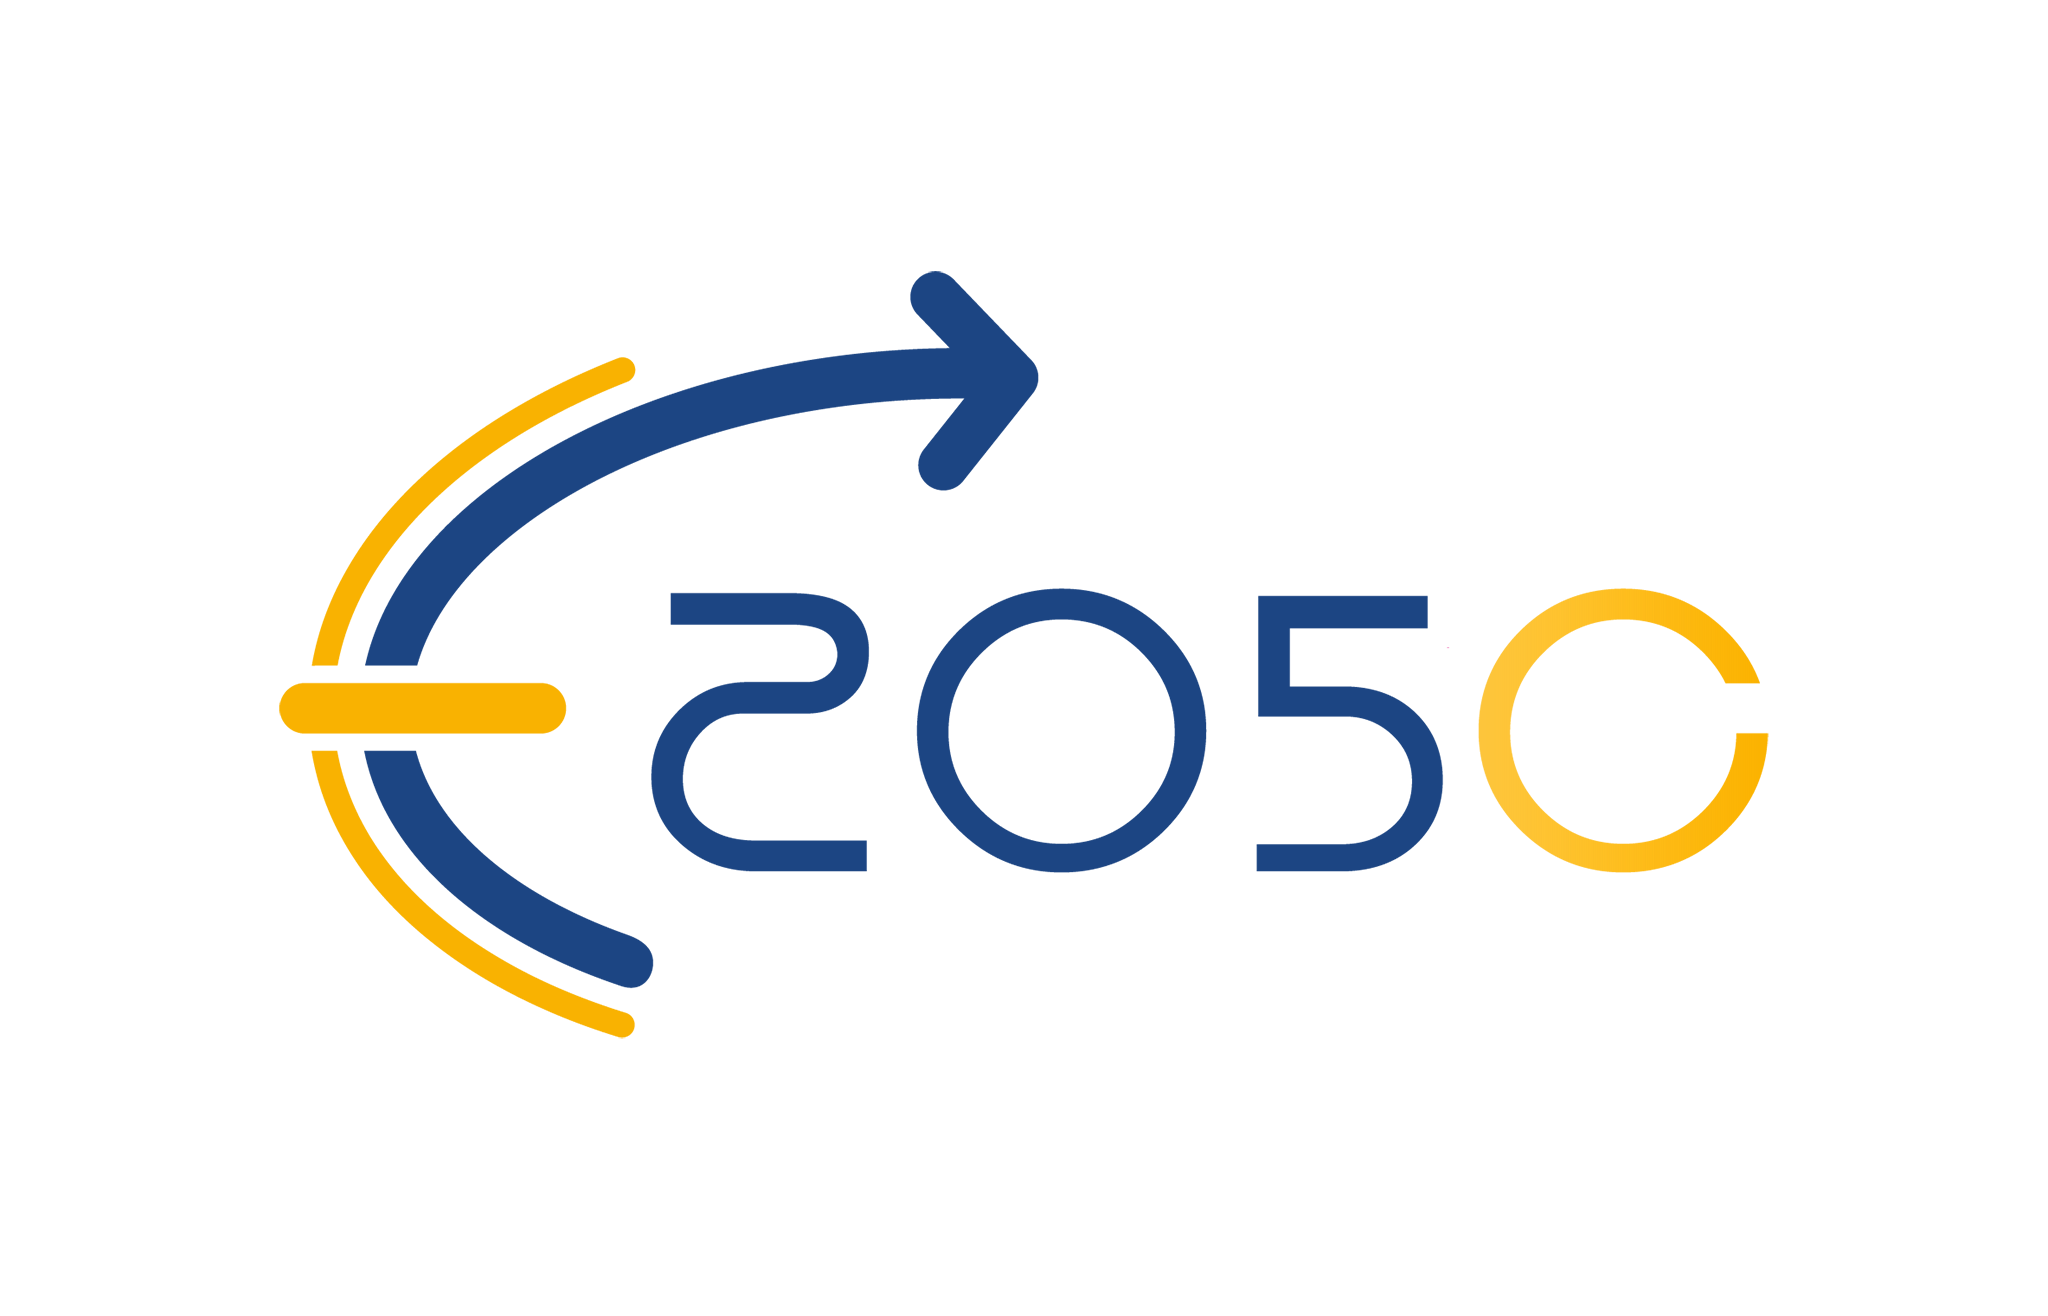 Evropa 2050